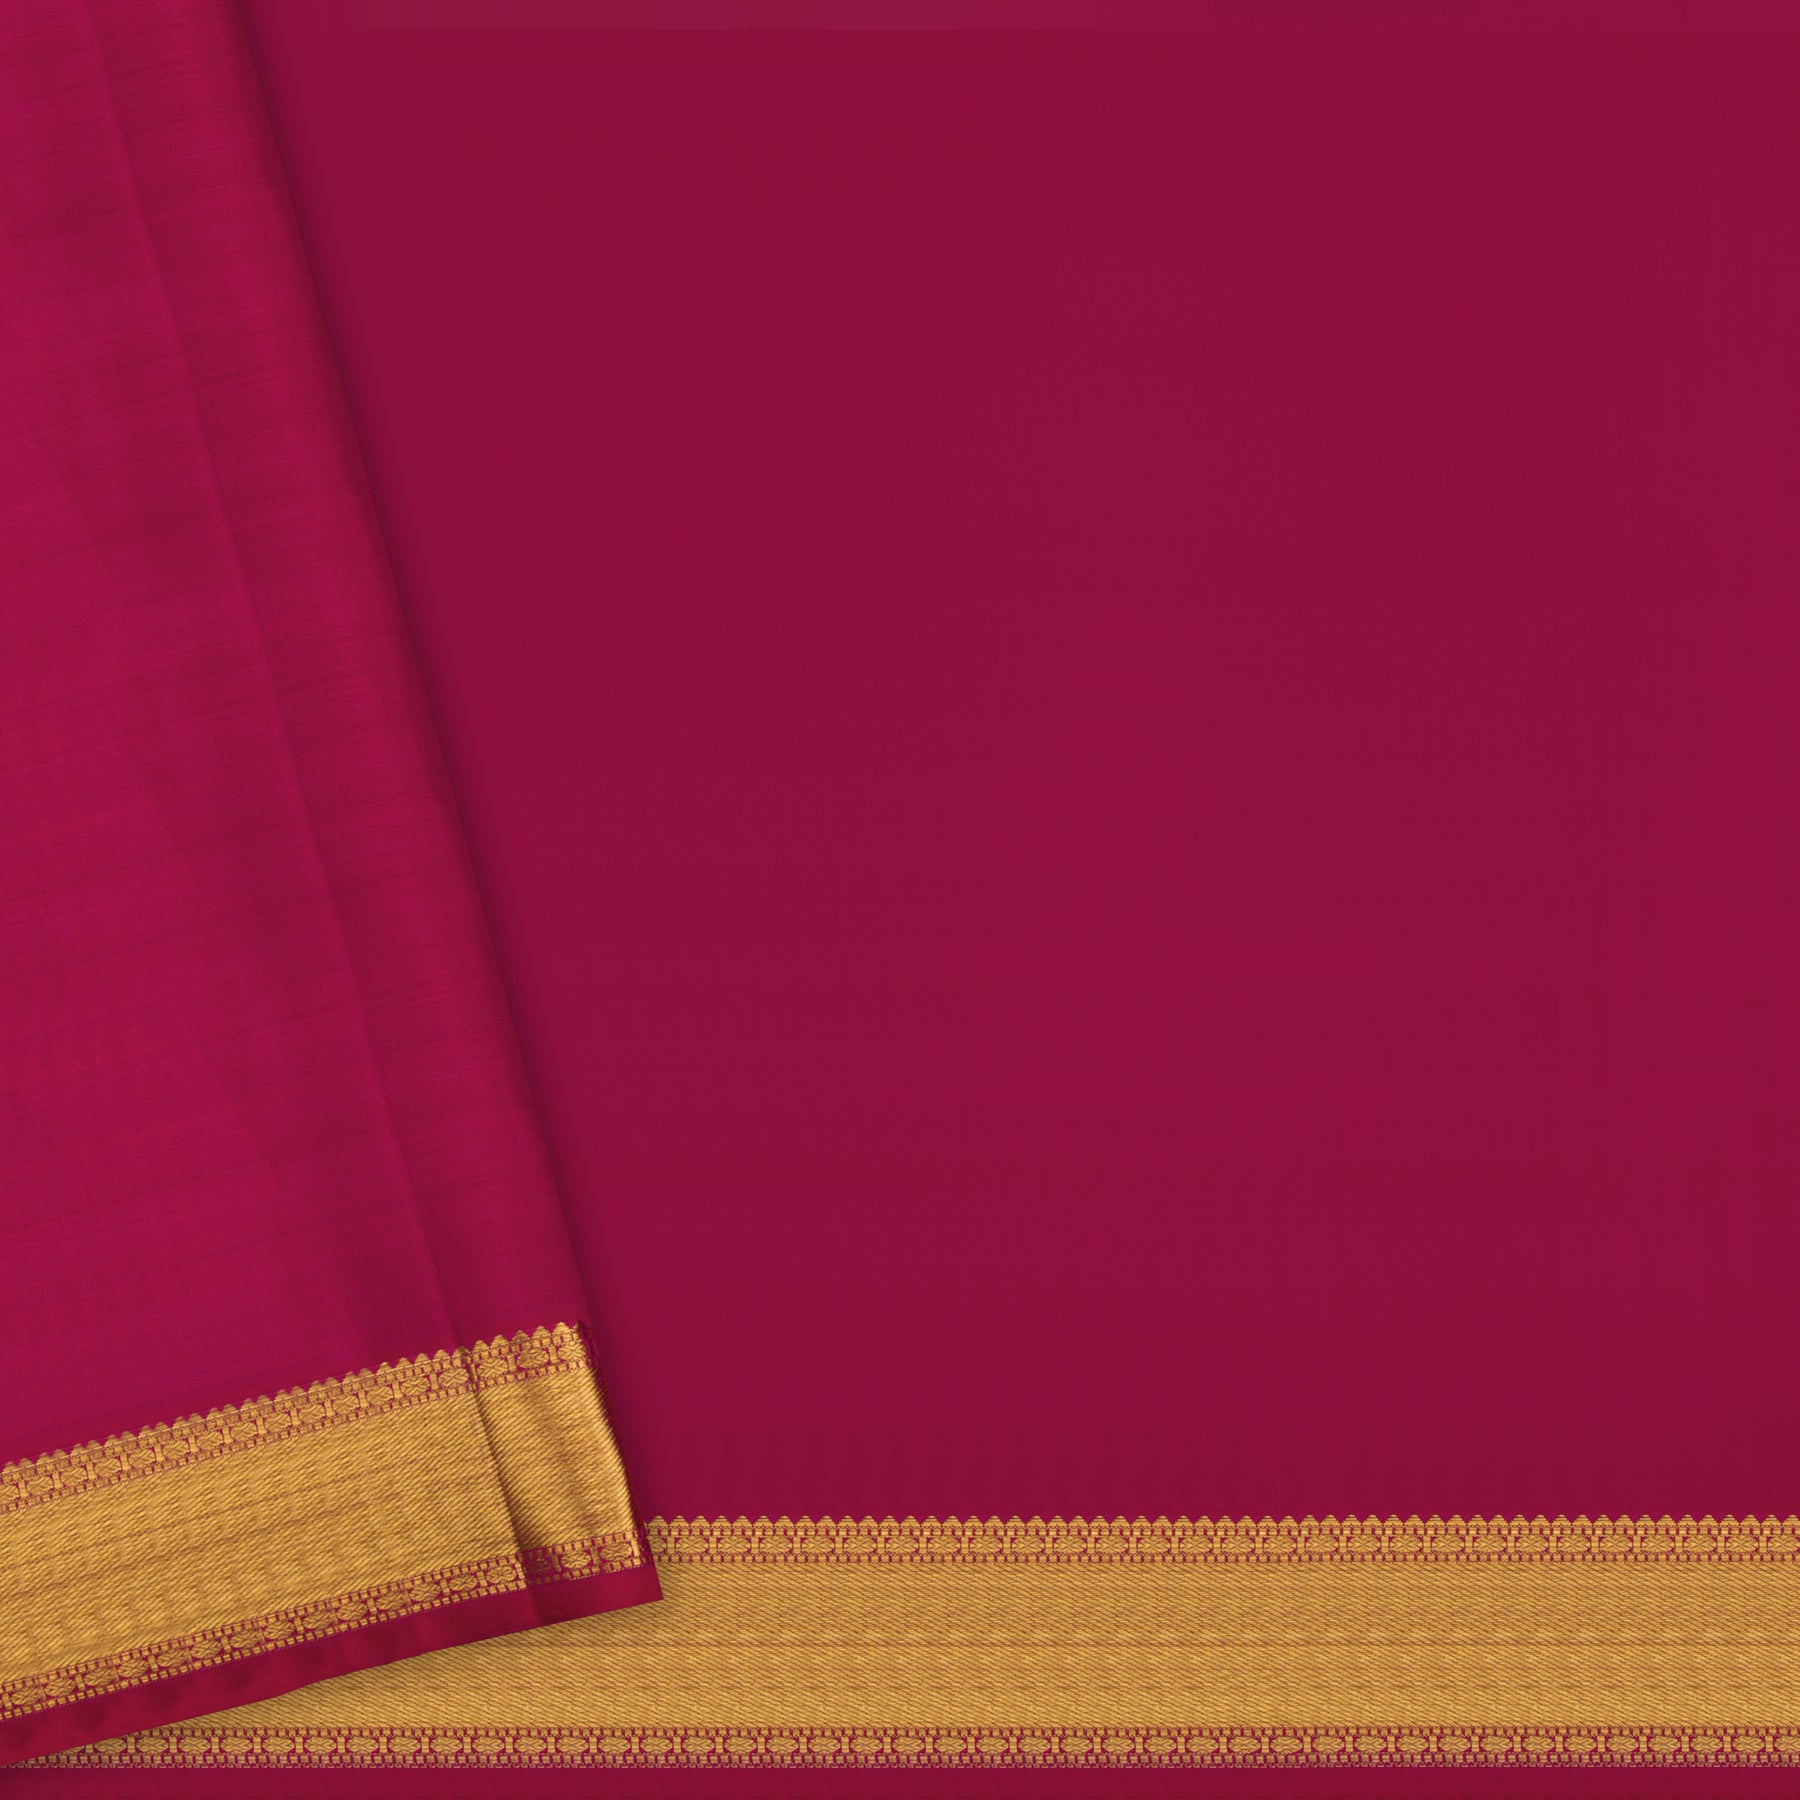 Kanakavalli Kanjivaram Silk Sari 23-611-HS001-13293 - Blouse View